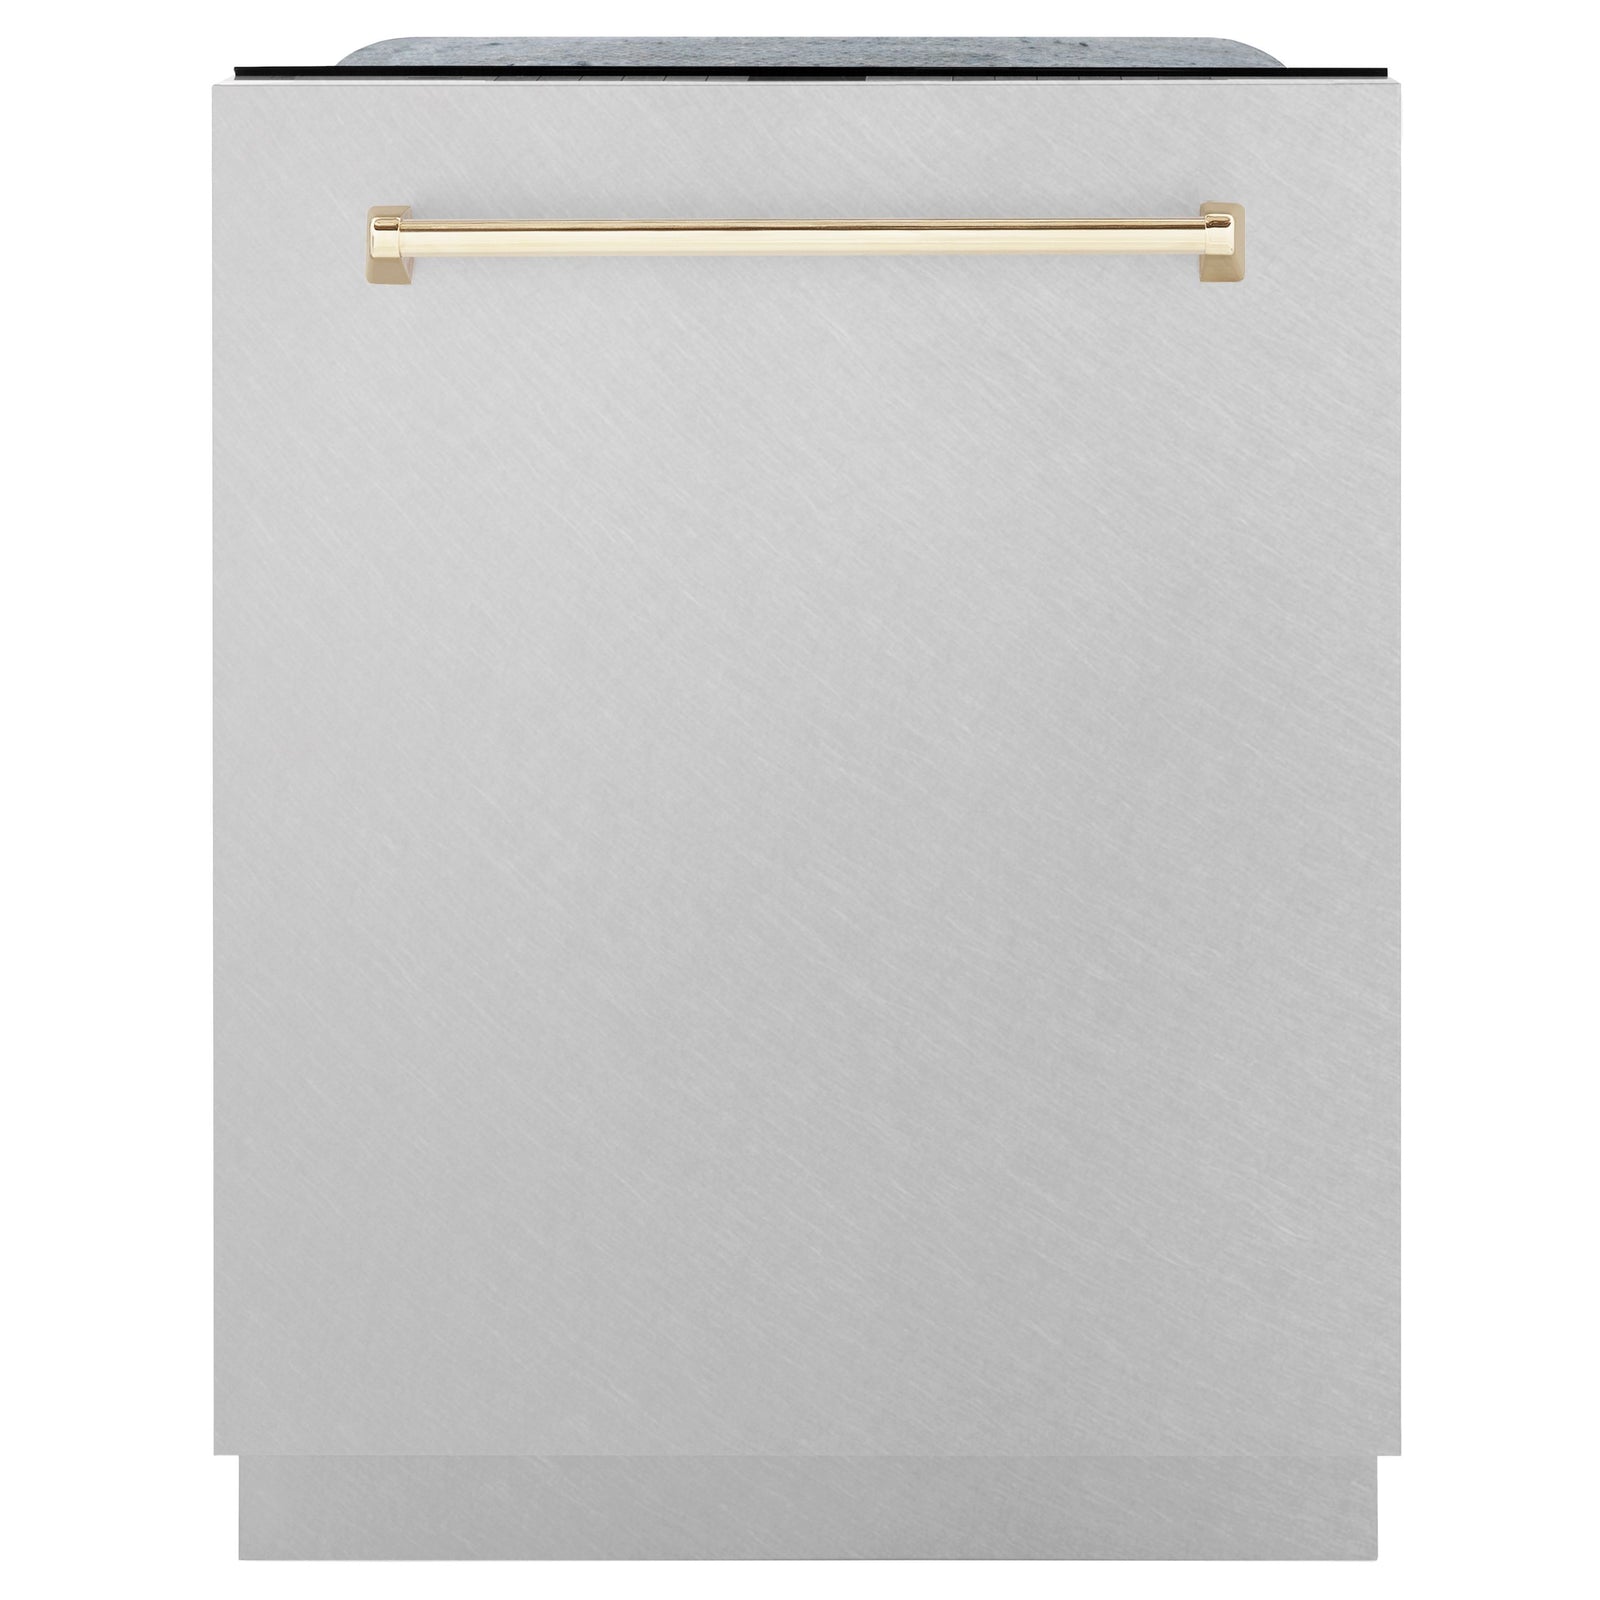 ZLINE Autograph Edition 24 in. Tall Dishwasher, Touch Control in DuraSnow® Stainless Steel with Gold Handle, DWMTZ-SN-24-G - Smart Kitchen Lab